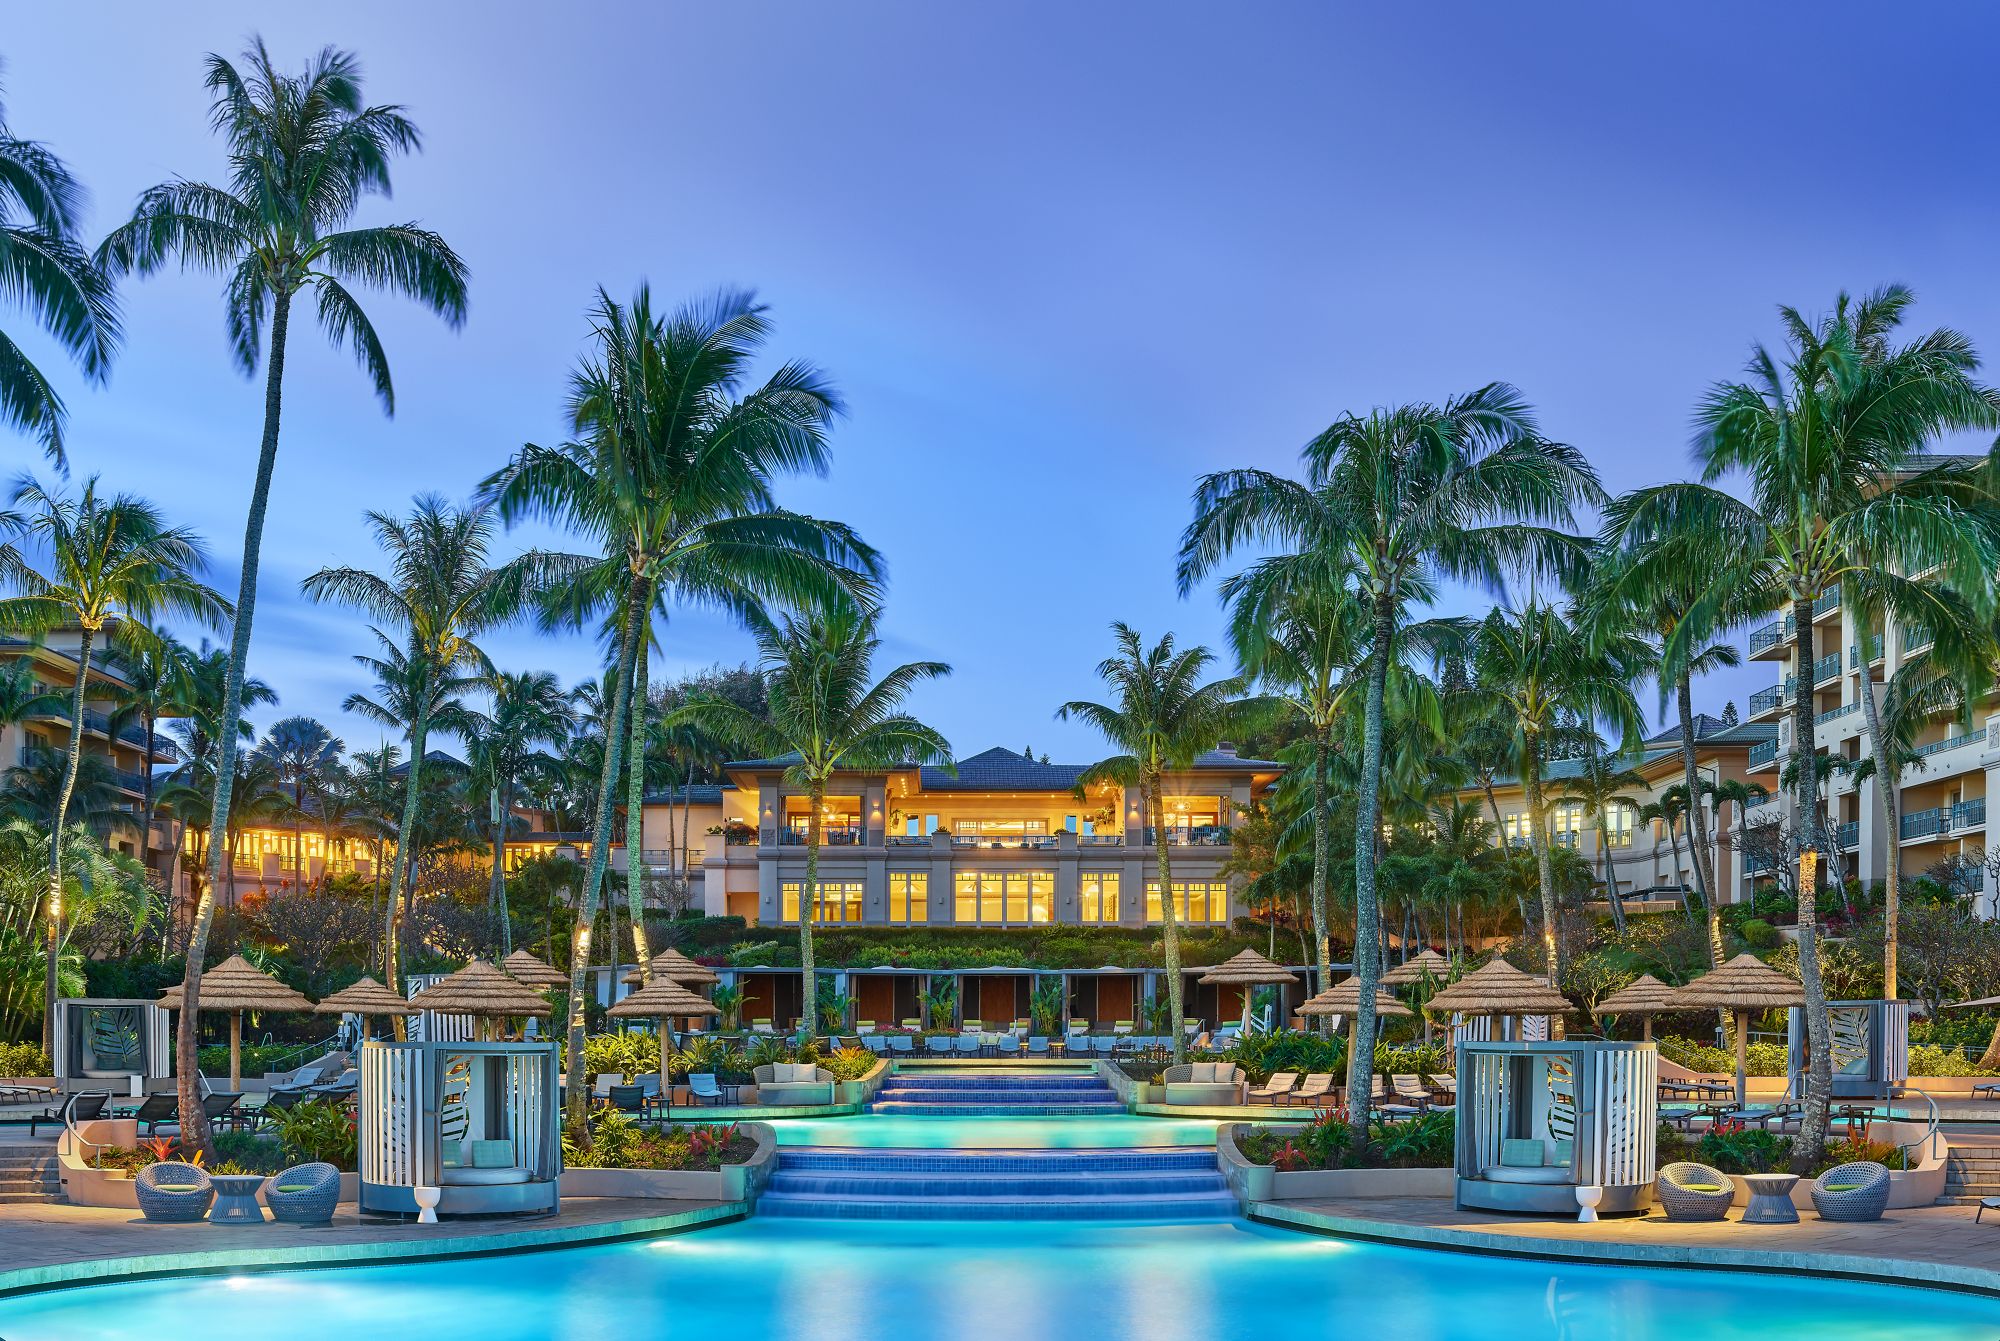 Ritz Carlton Maui resort pool